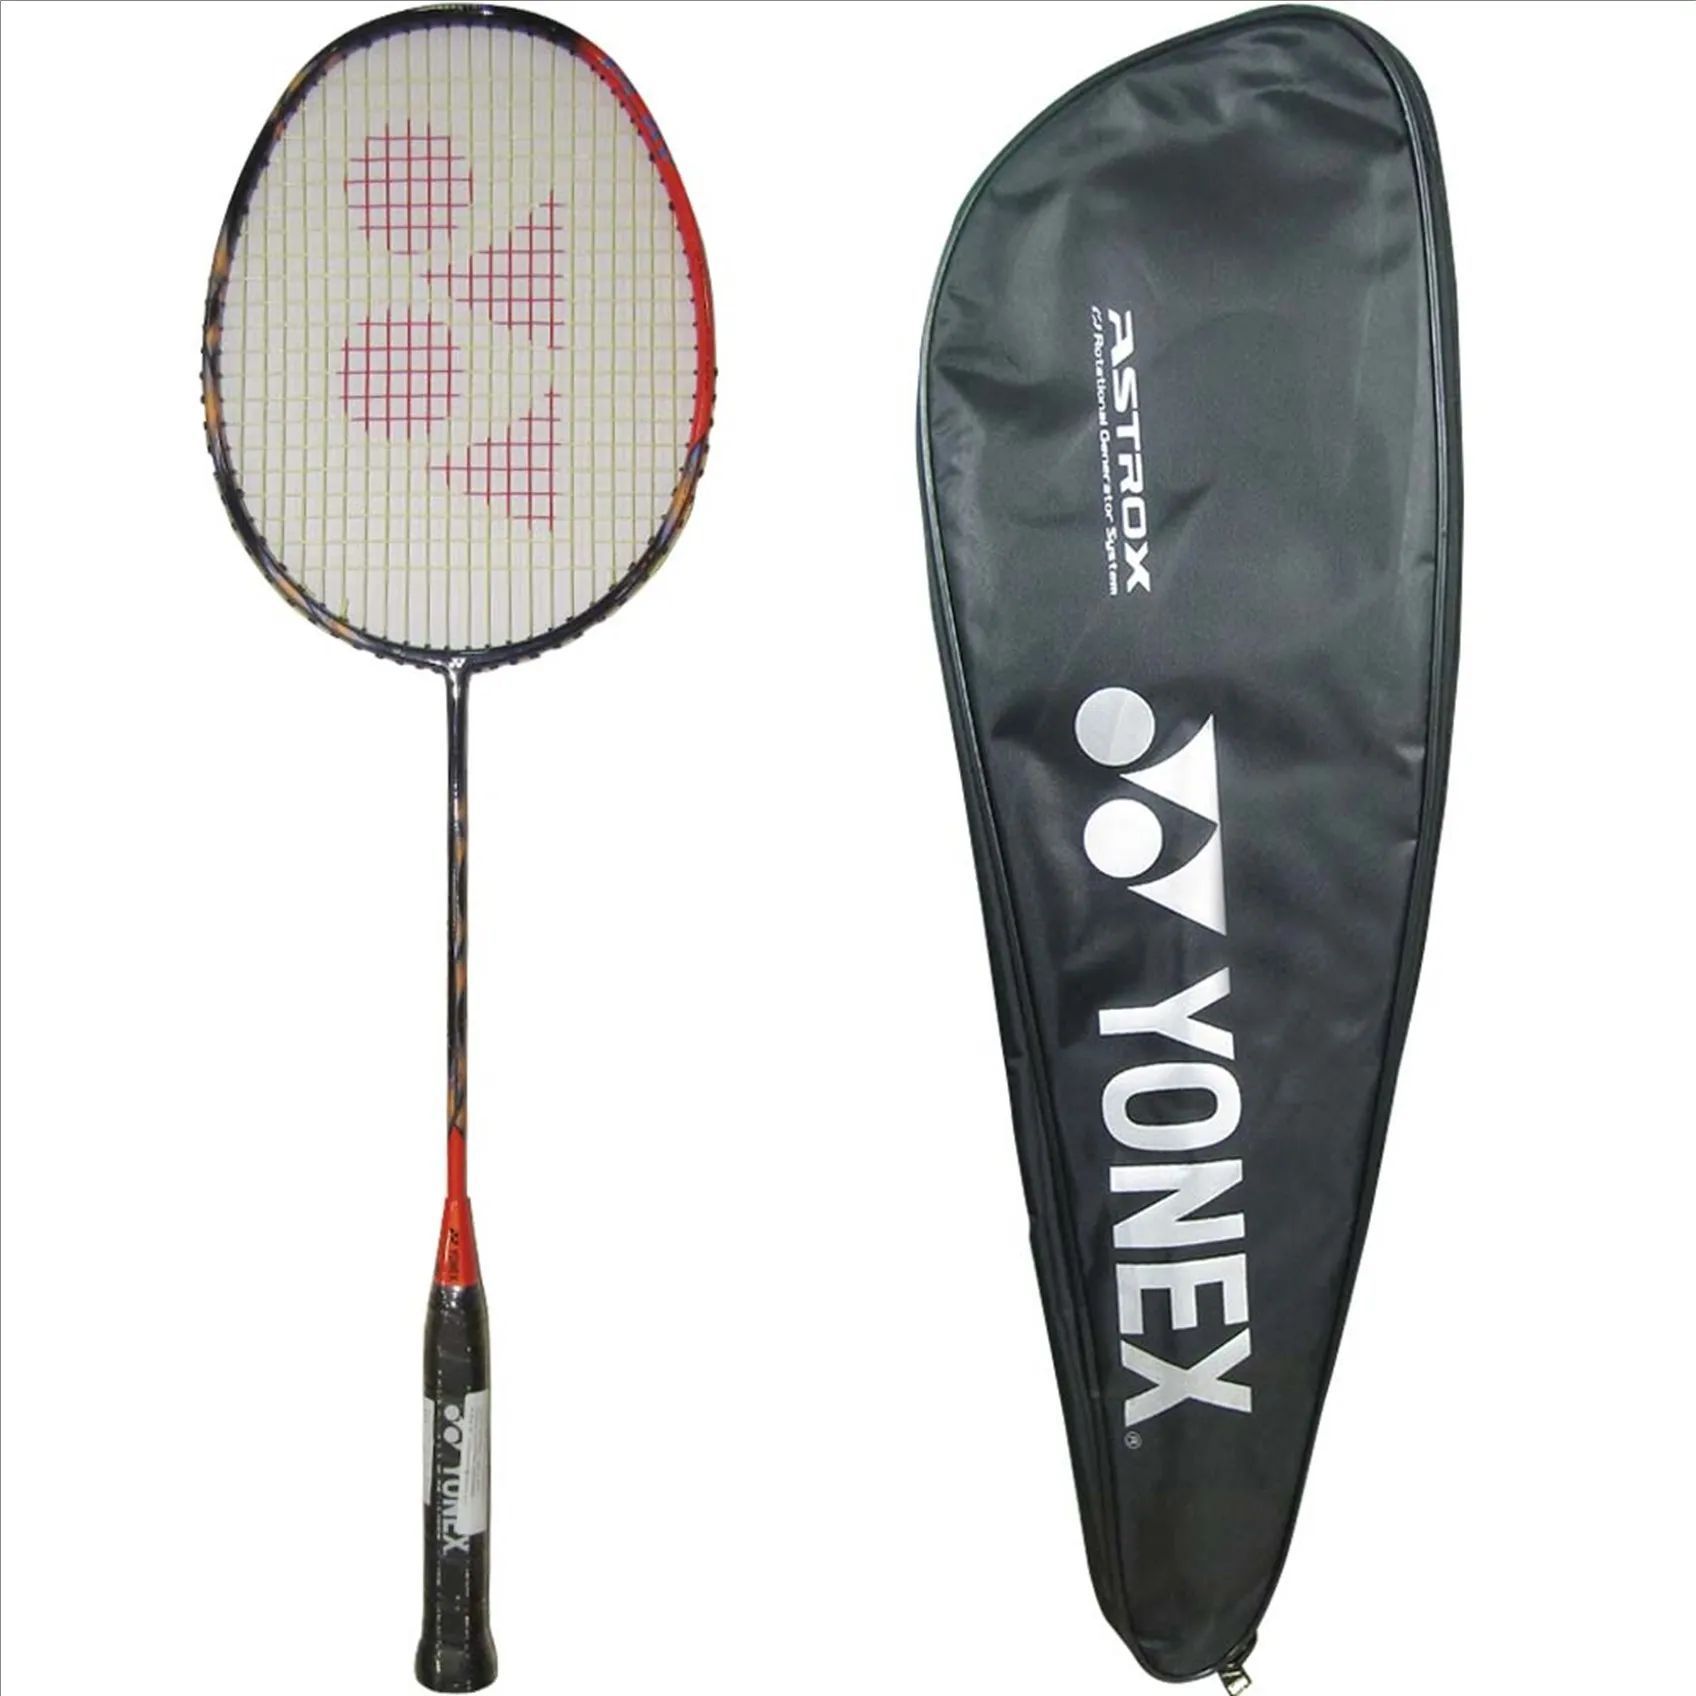 Buy YONEX Badminton Rackets India YONEX Badminton Rackets Lowest Prices and Reviews India khelmart